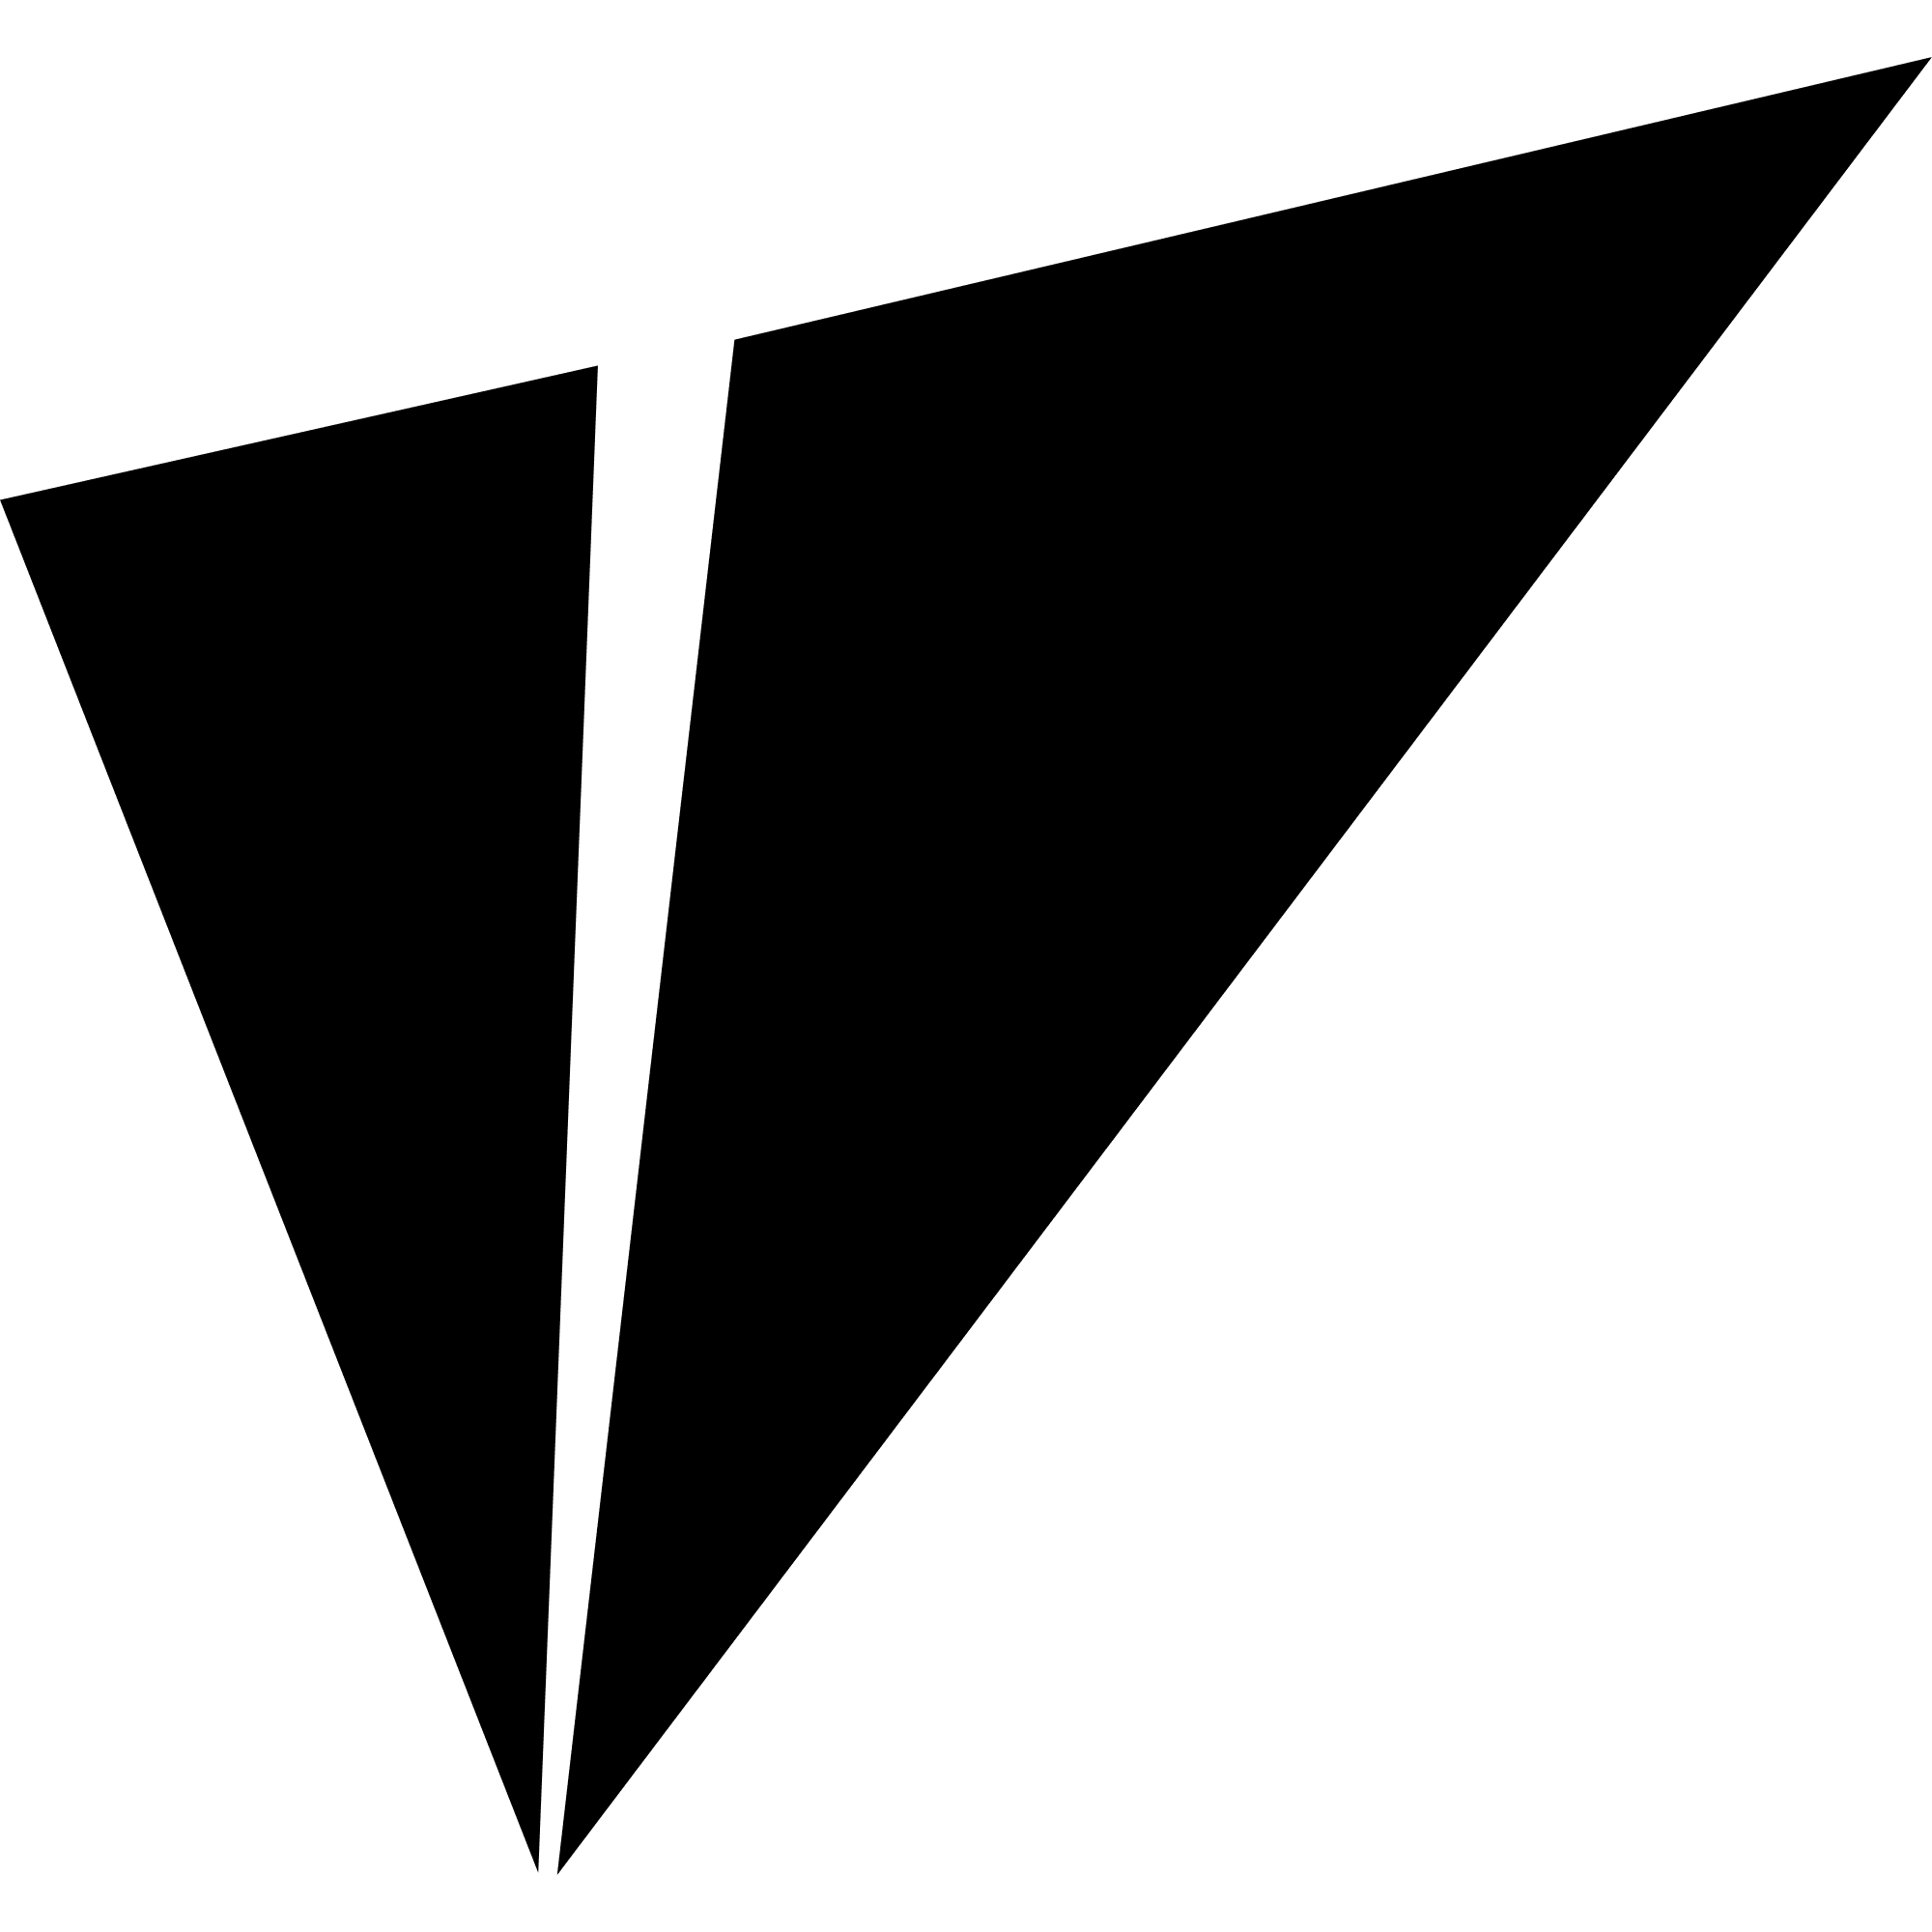 VITE logo in png format